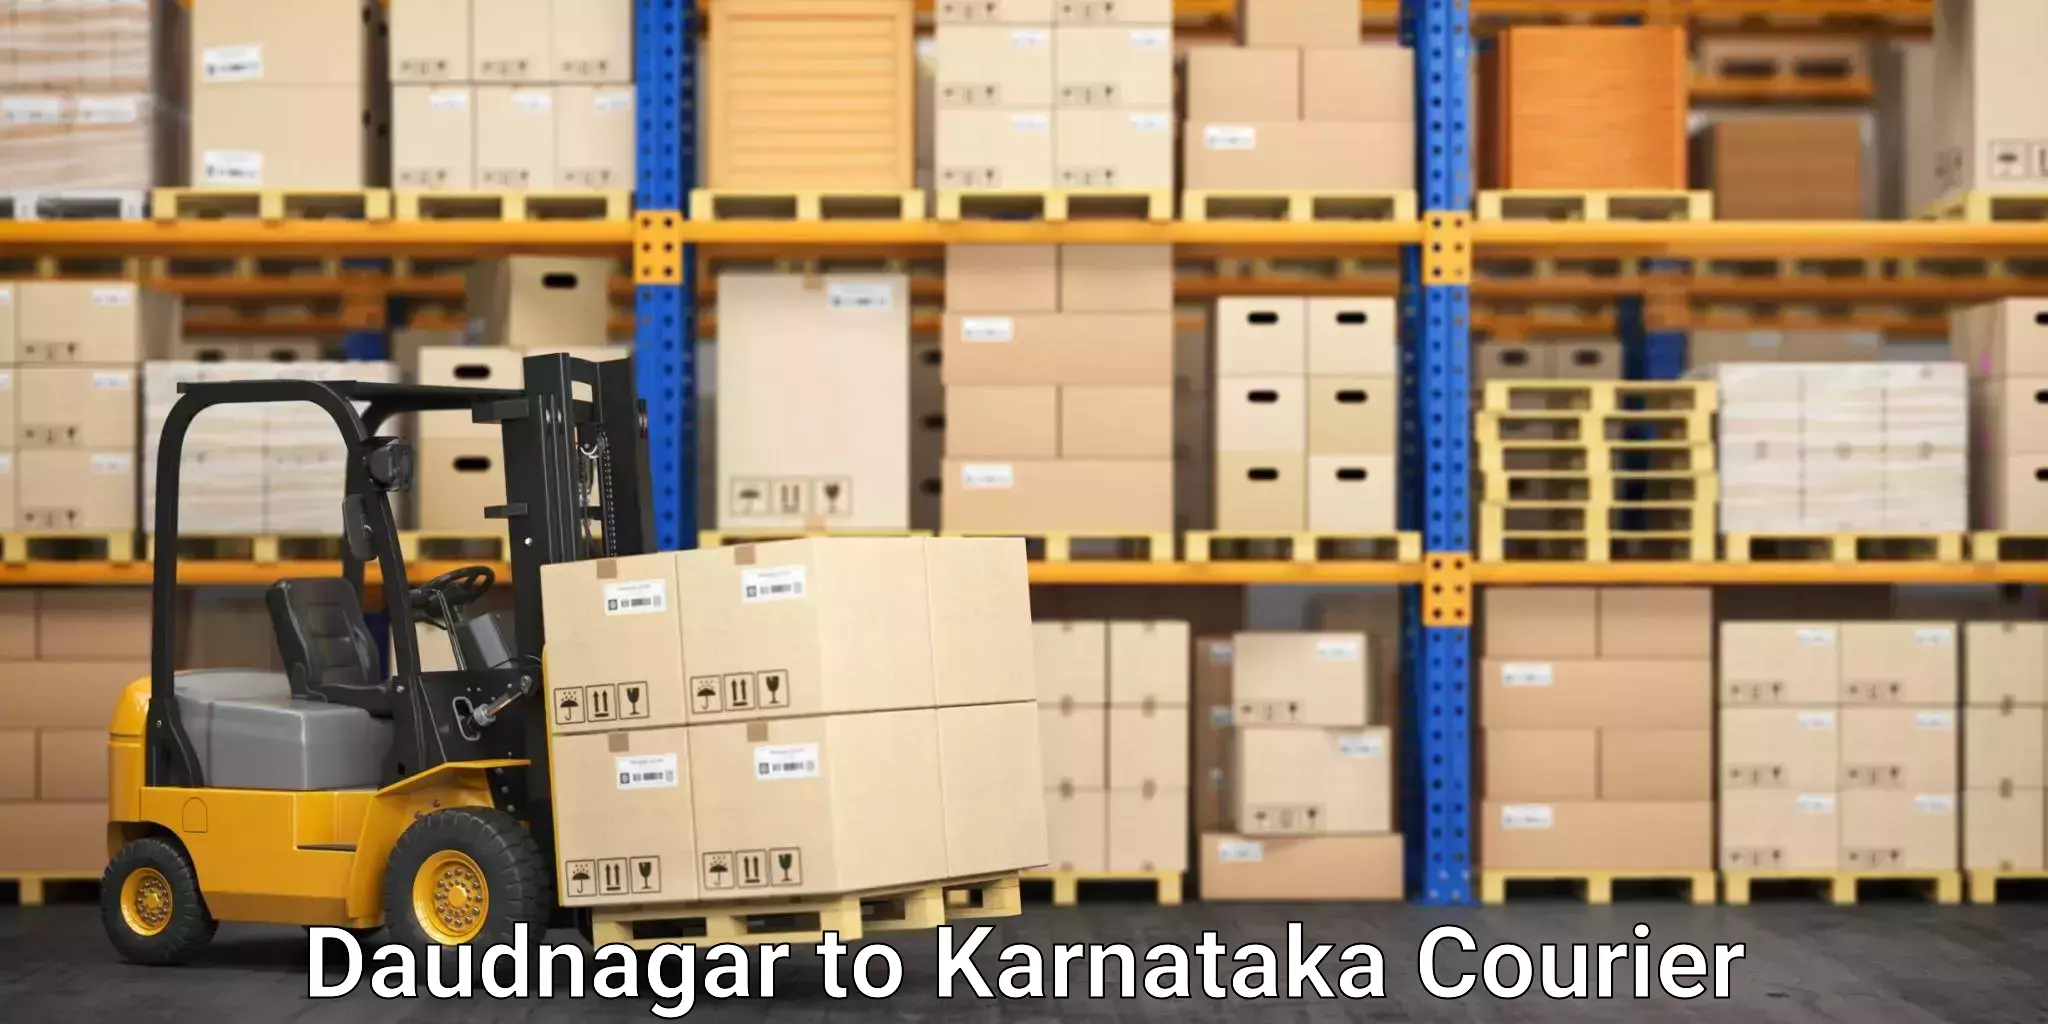 Professional packing services Daudnagar to Bantwal